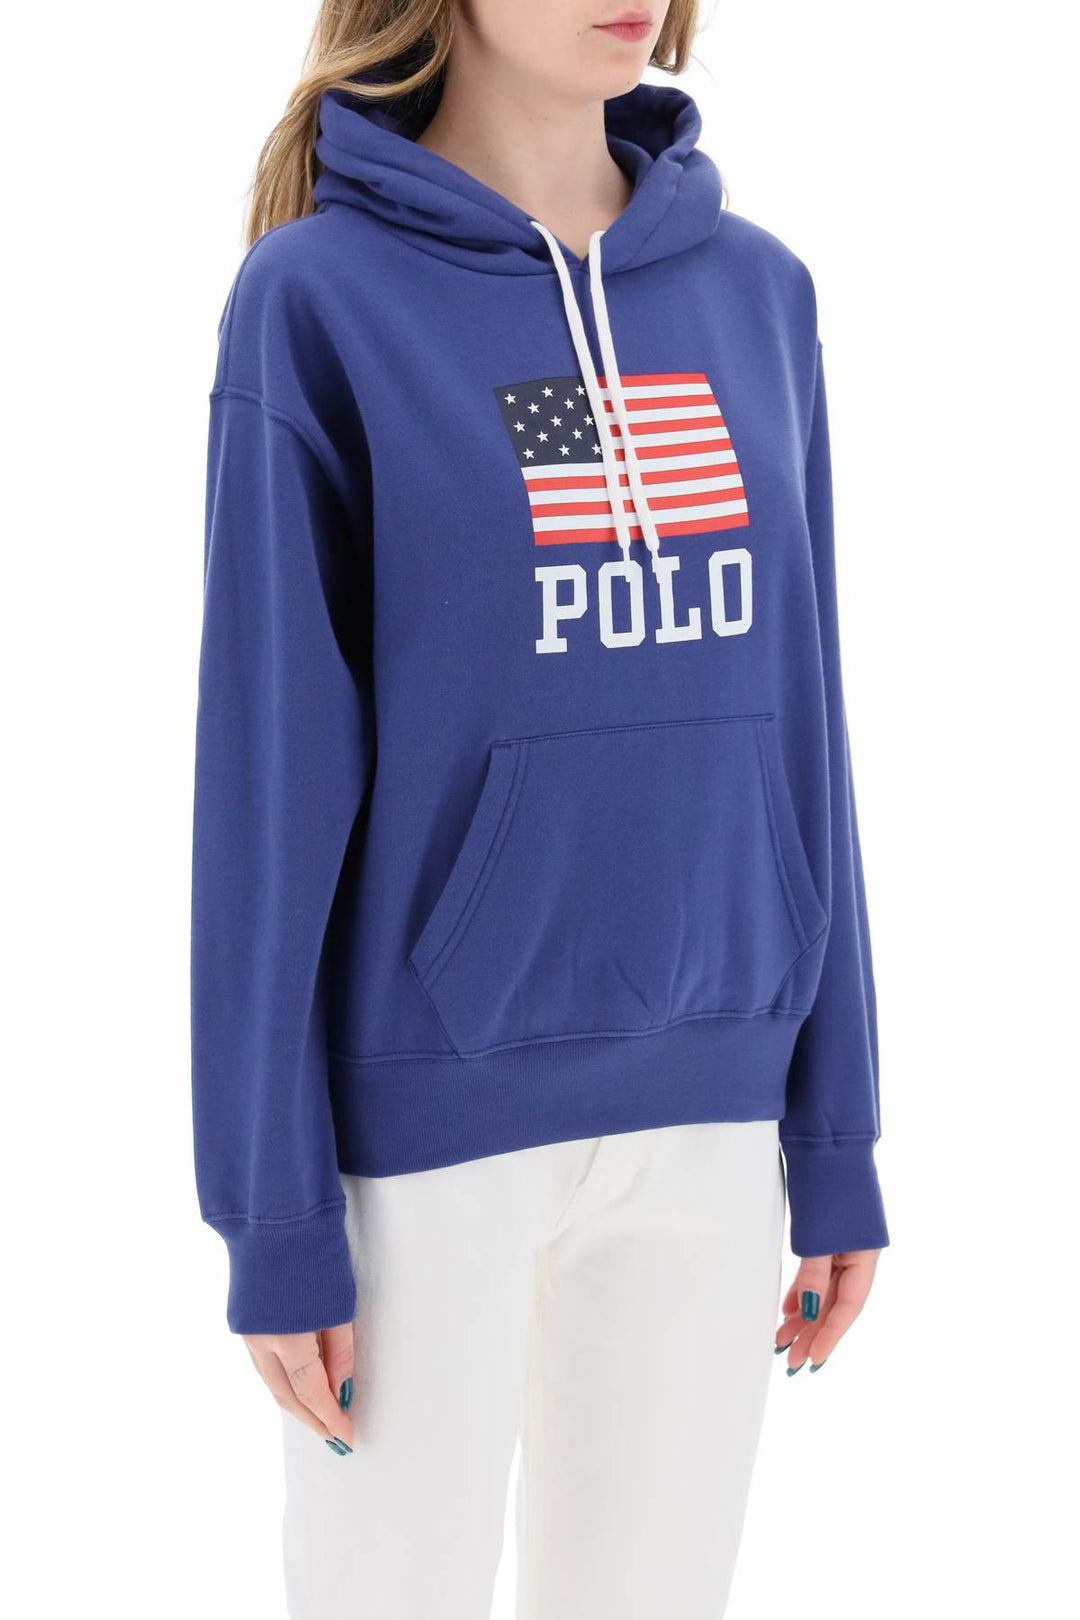 Polo Ralph Lauren Hooded Sweatshirt With Flag Print   Blue